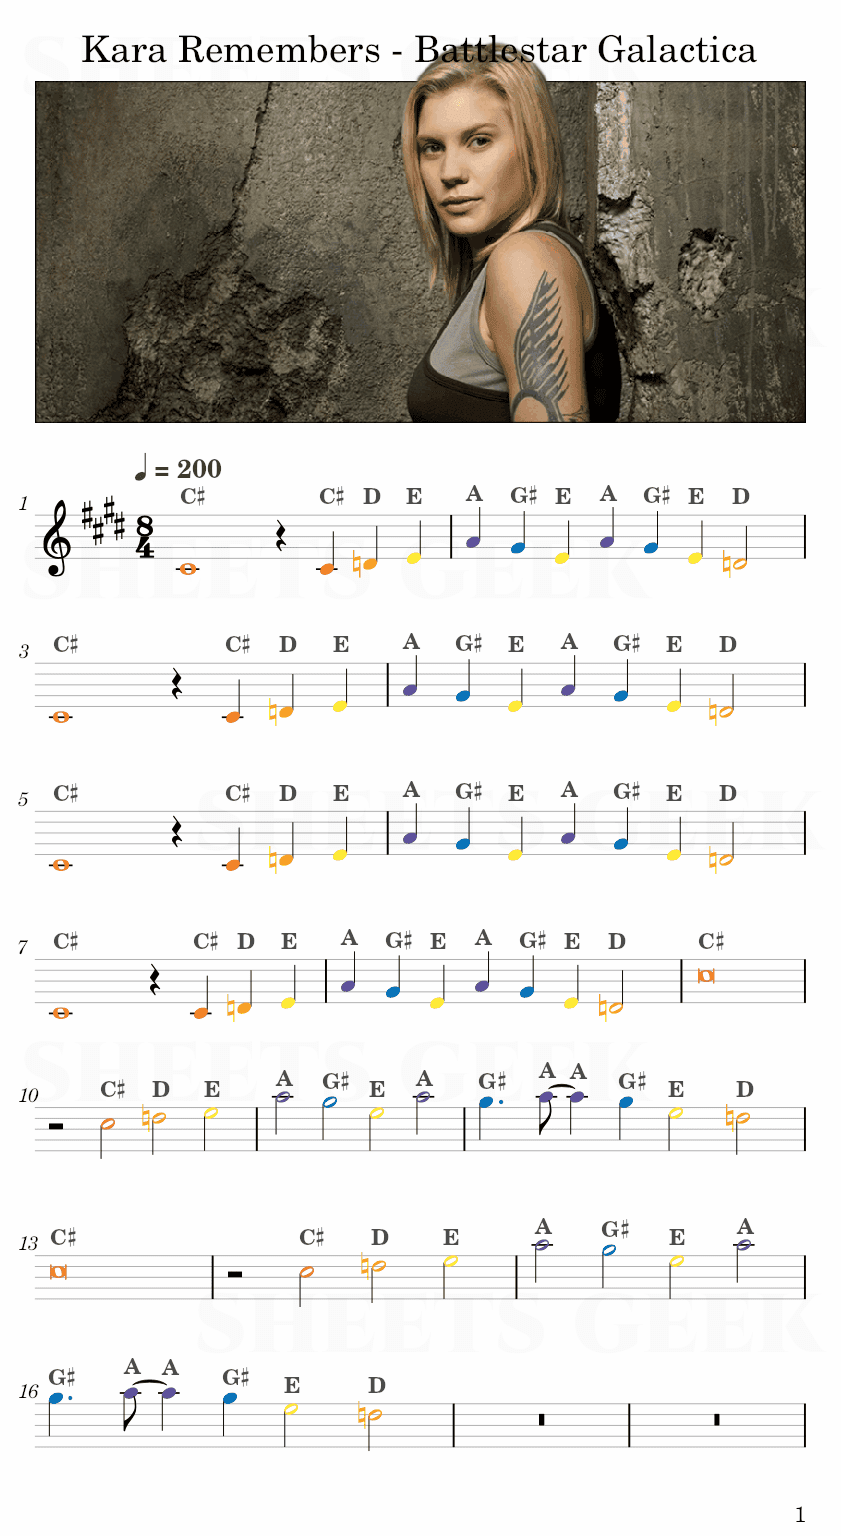 Kara Remembers - Battlestar Galactica Easy Sheet Music Free for piano, keyboard, flute, violin, sax, cello page 1